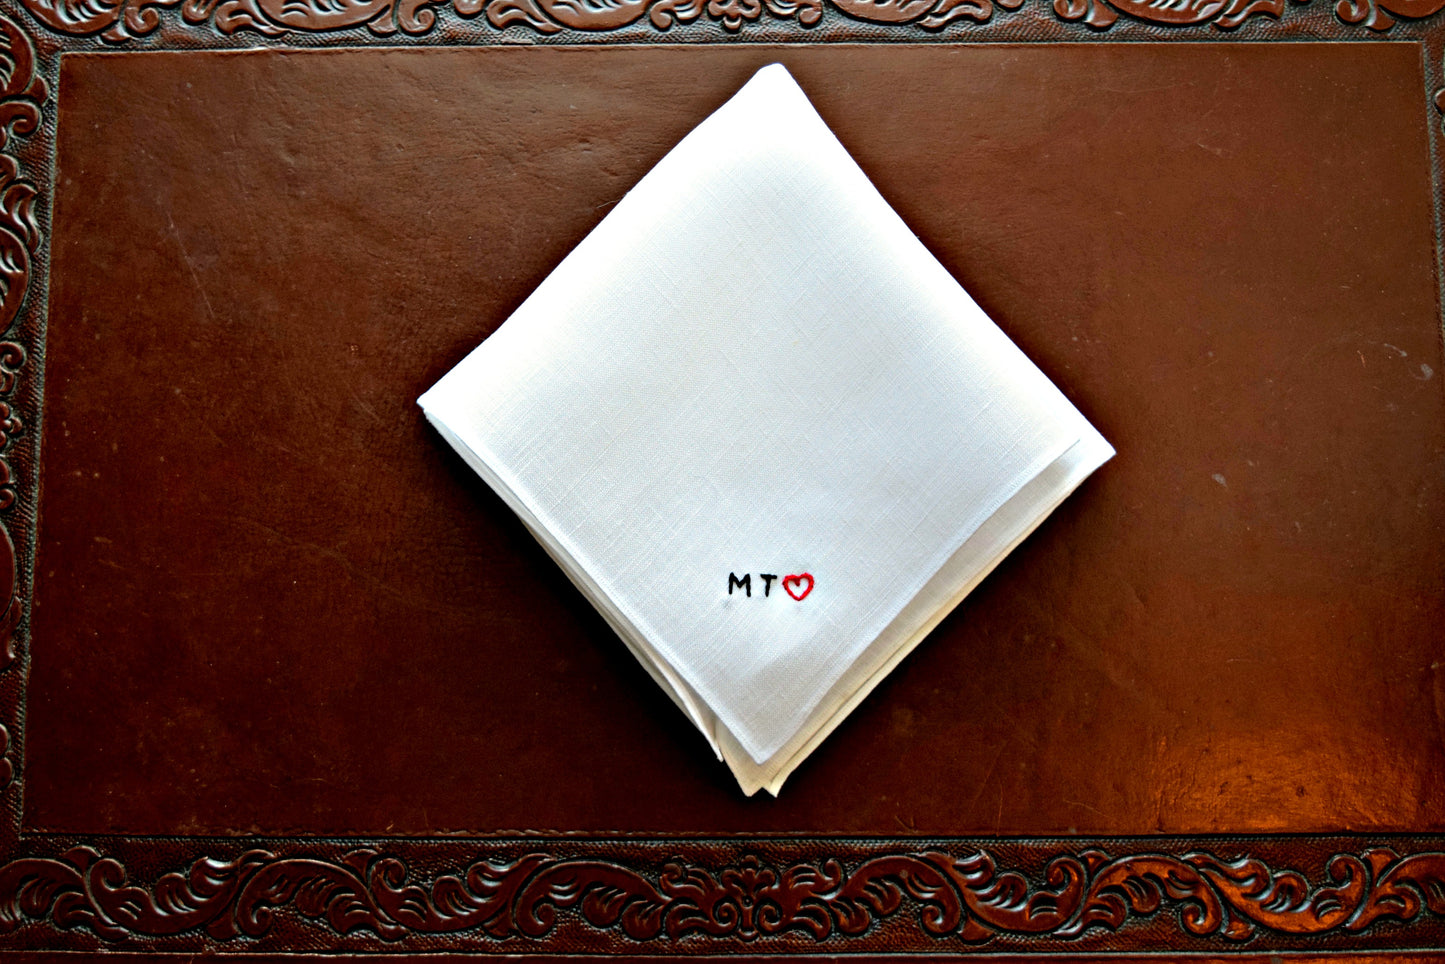 White Irish linen handkerchief embroidered MT (heart) in tiny block letters